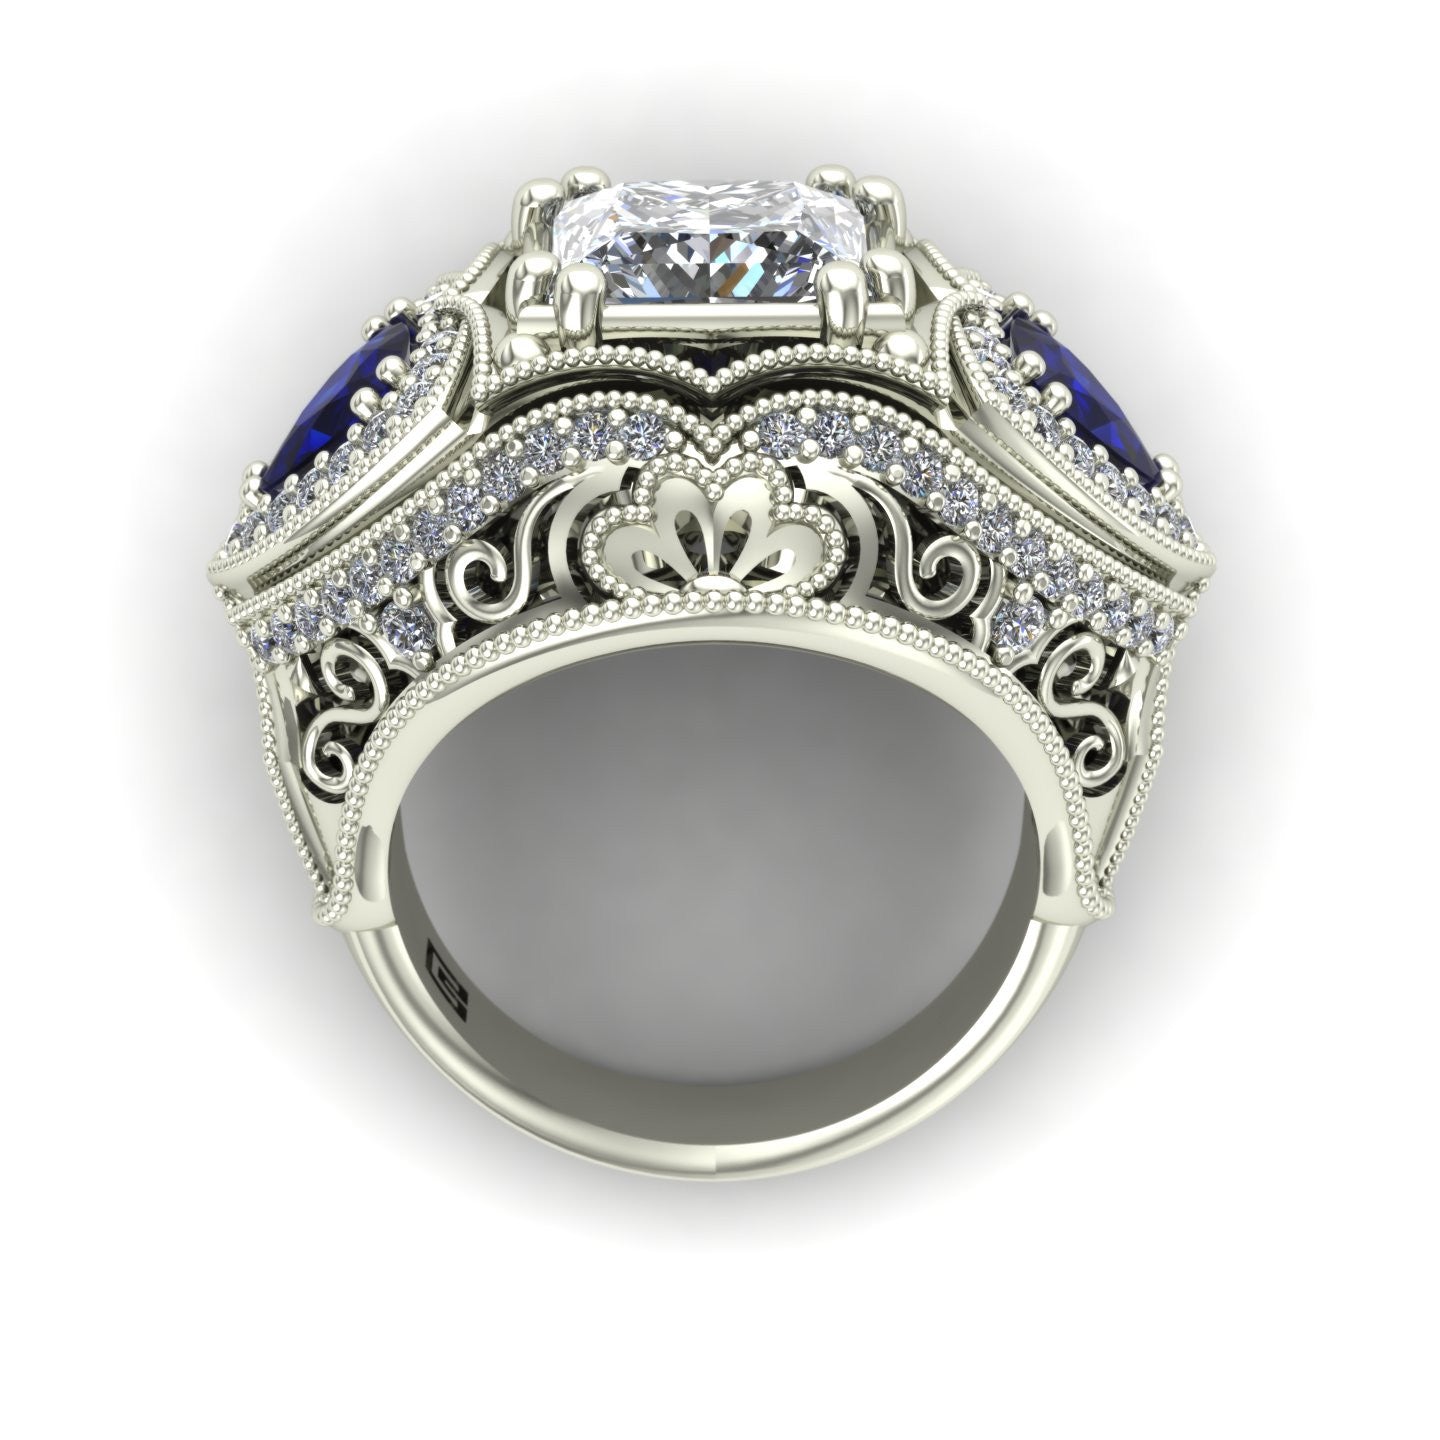 2ct princess diamond dome ring trillion sapphires through finger view